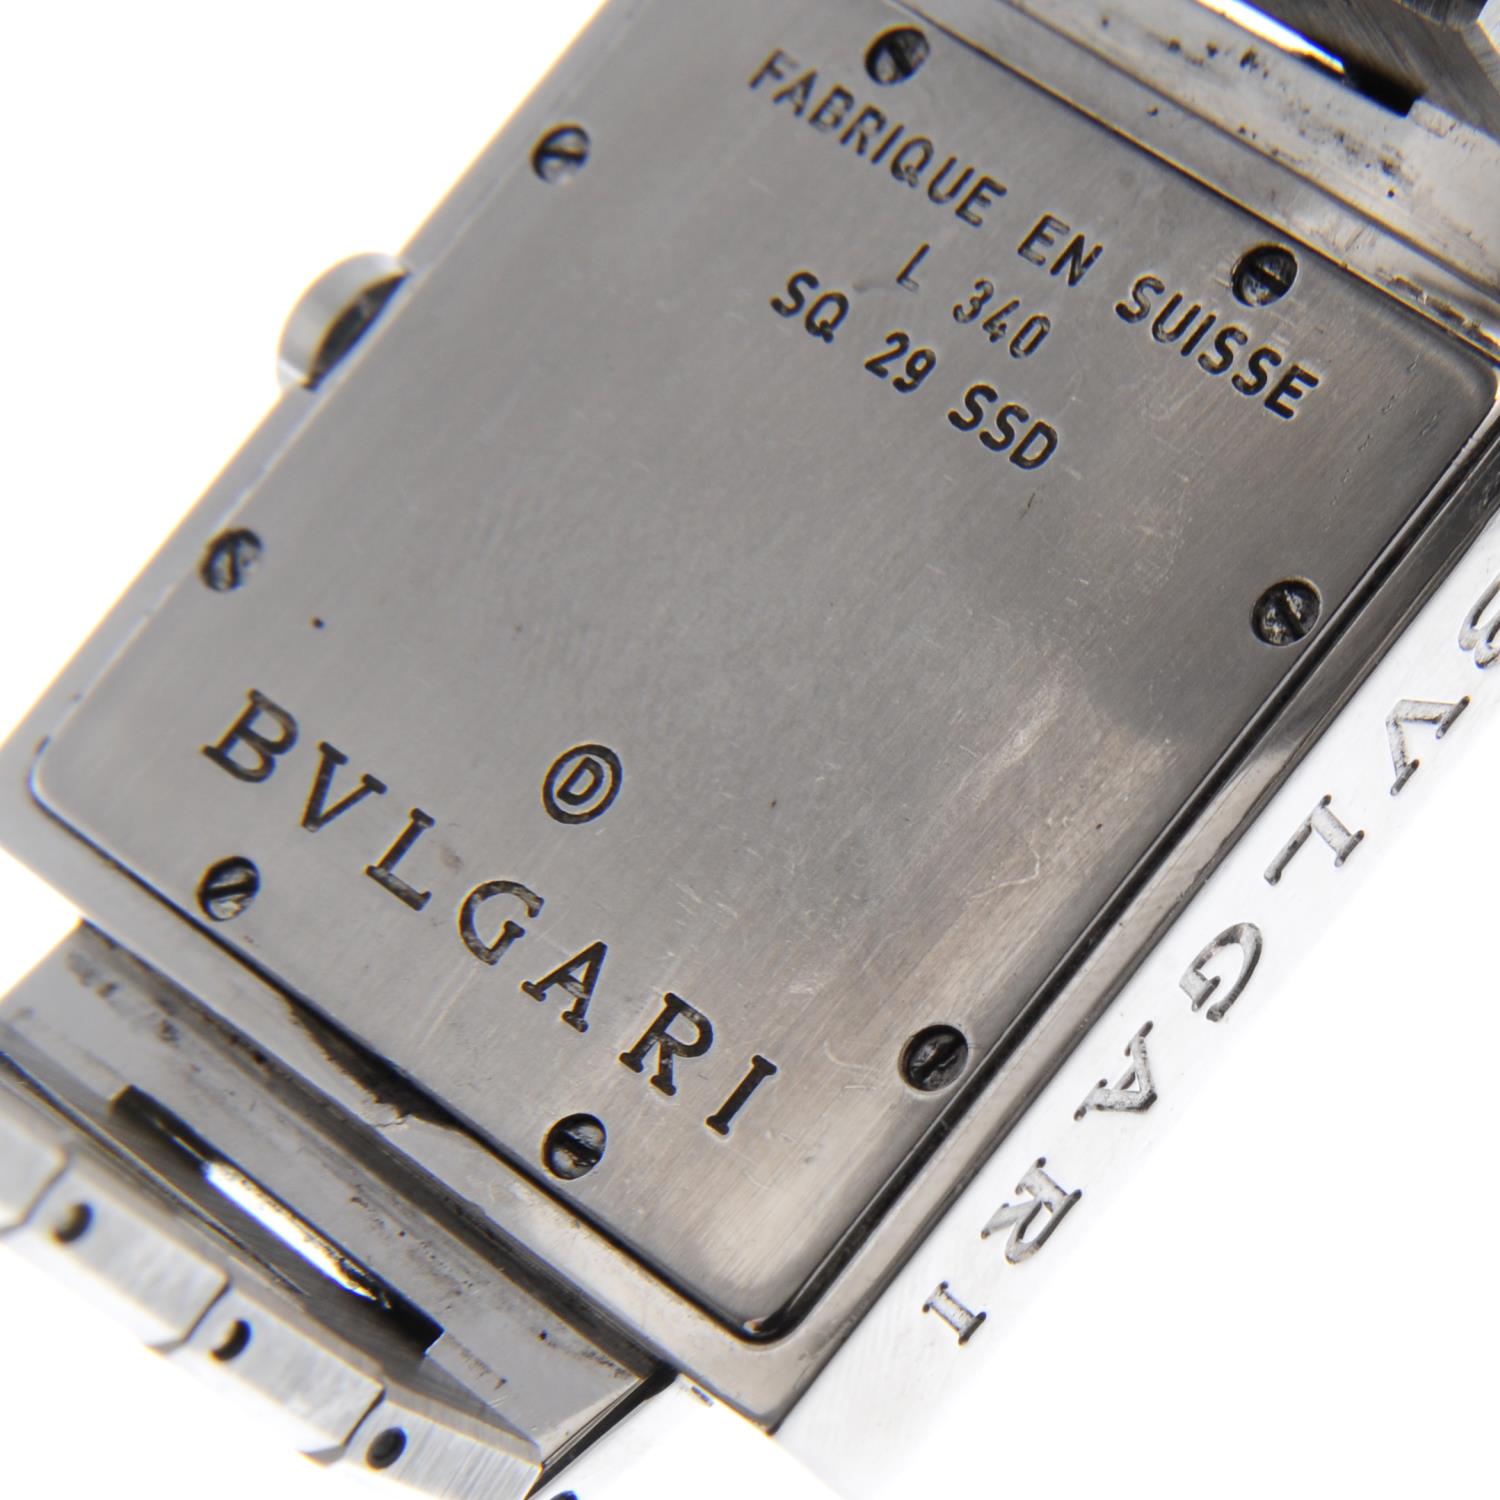 BULGARI - a mid-size Quadrato bracelet watch. - Image 3 of 4